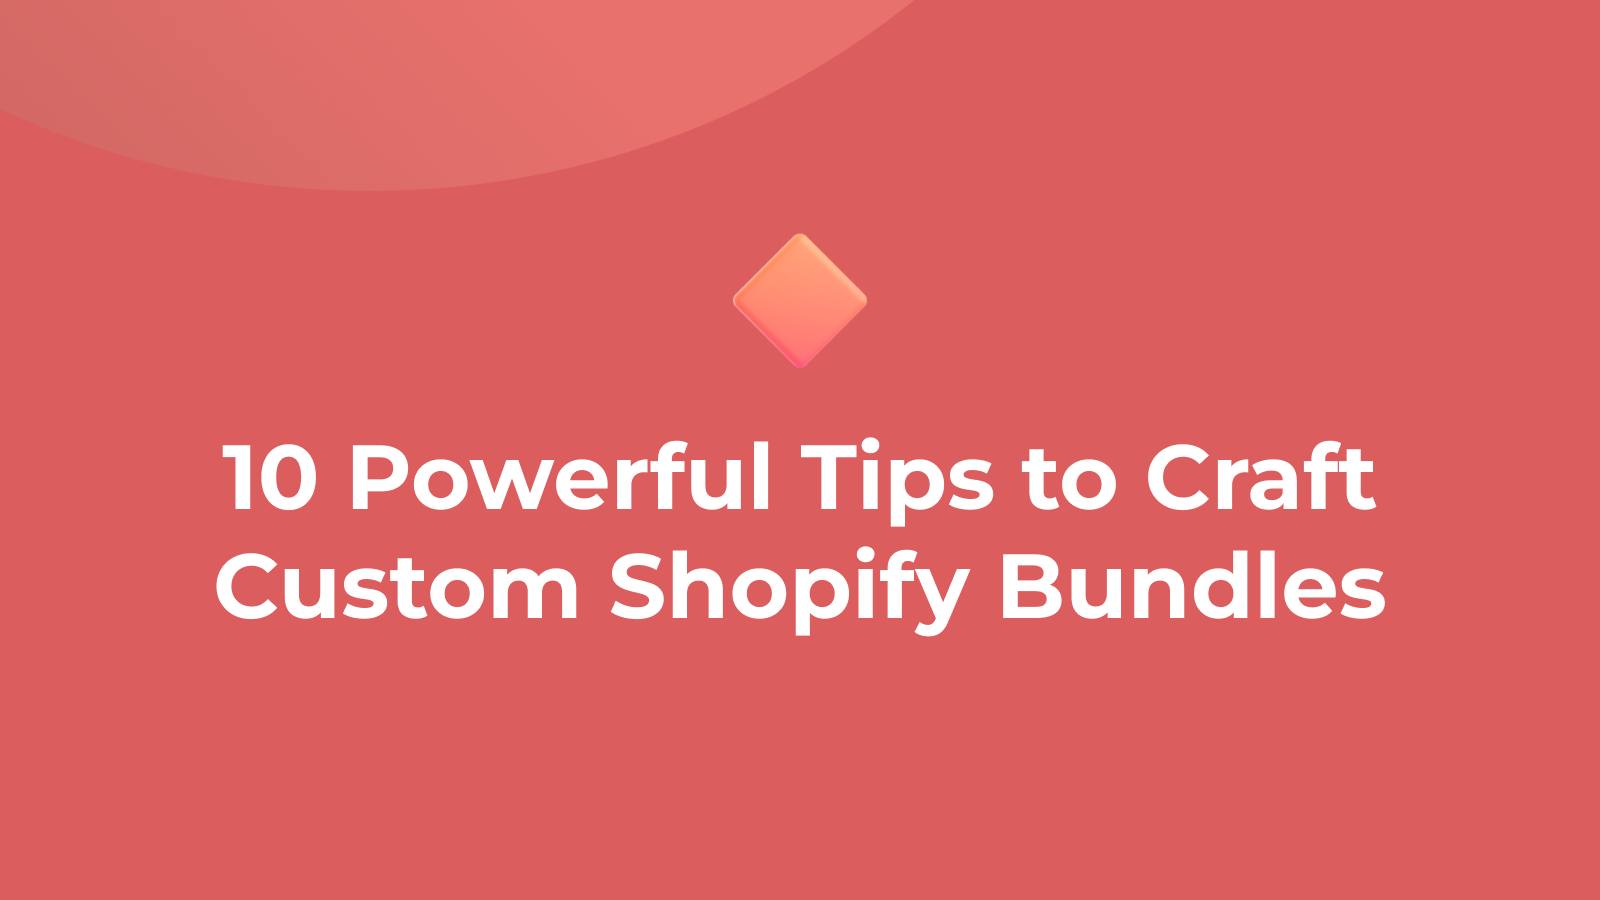 10 Powerful Tips to Craft Custom Shopify Bundles